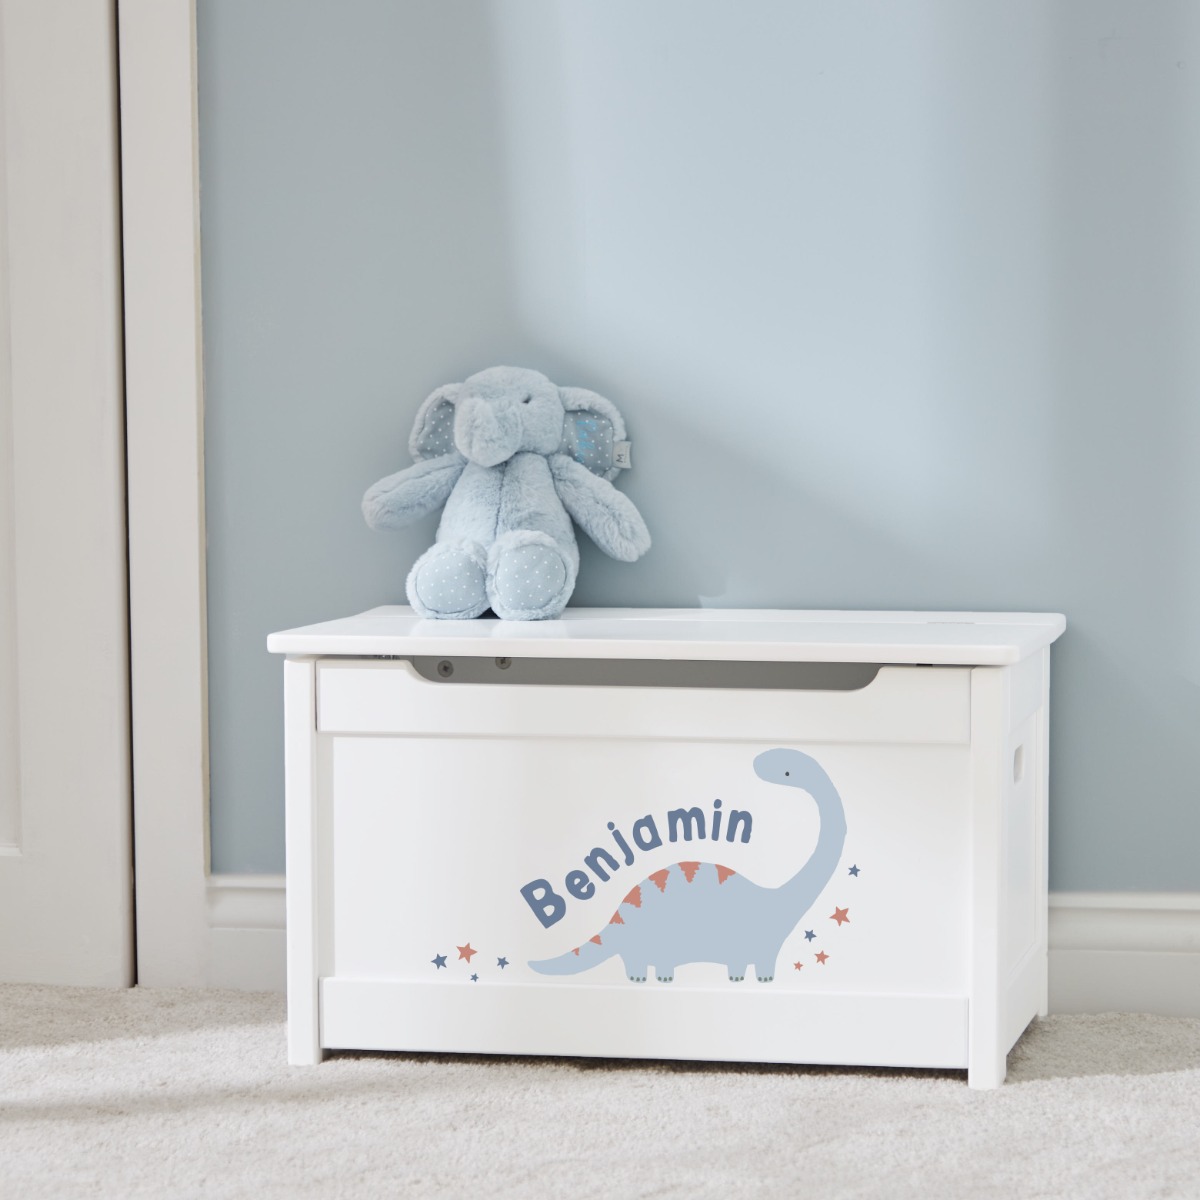 Personalised White One Dinosaur Design Panelled Toy Box